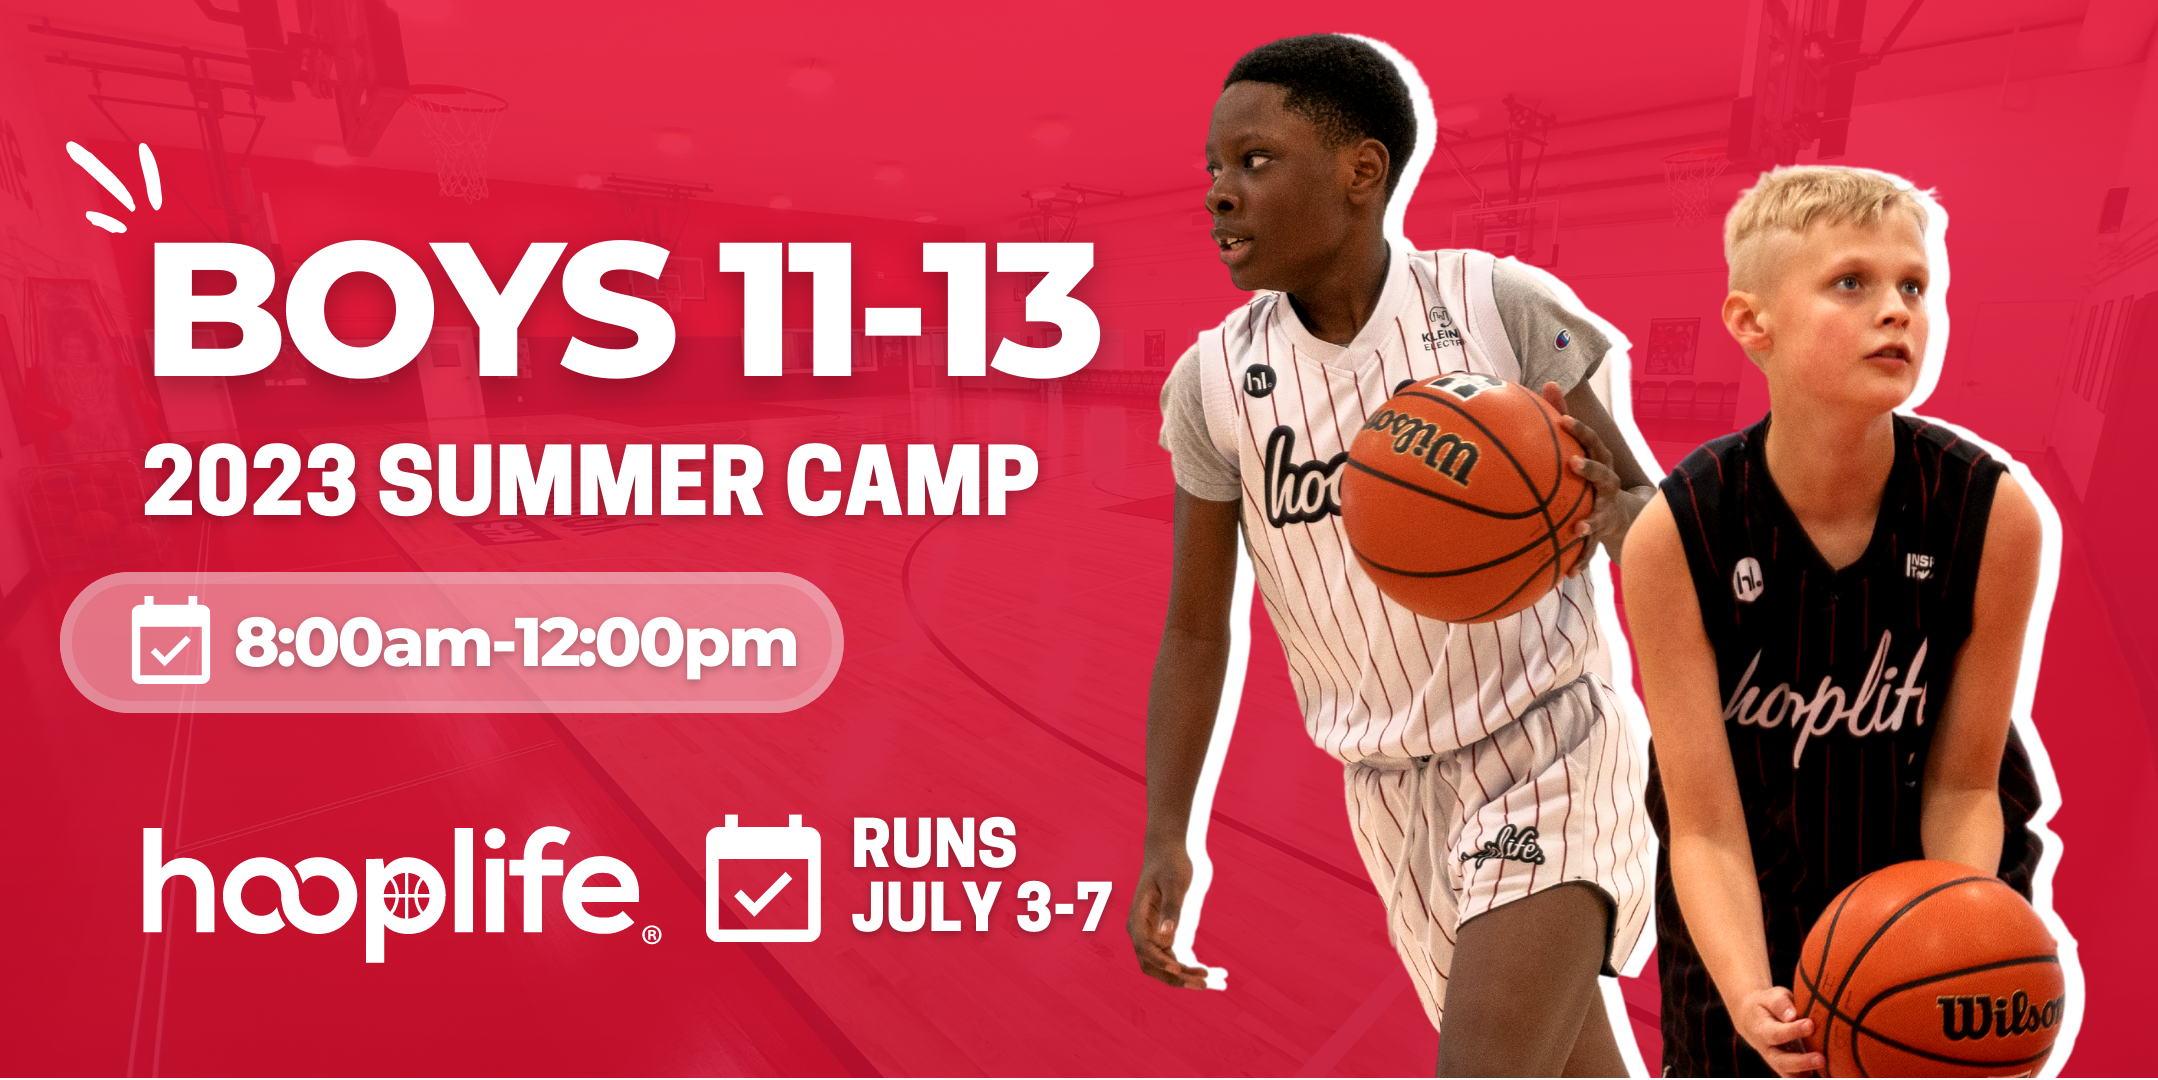 Boys 11-13 Summer Camp | July 3-7